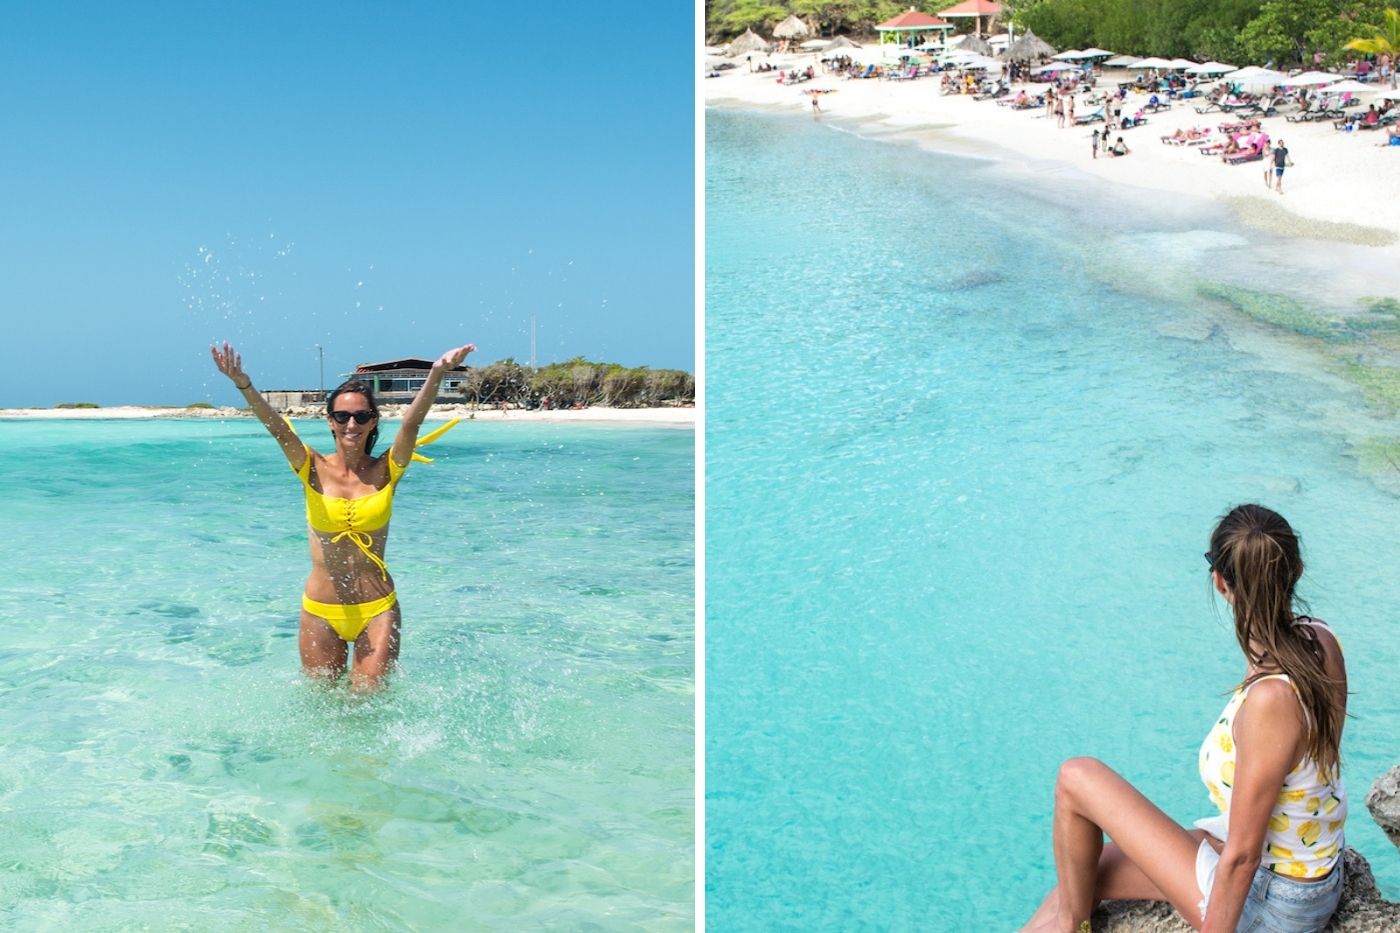 Aruba vs Curacao: Which Caribbean island is better?